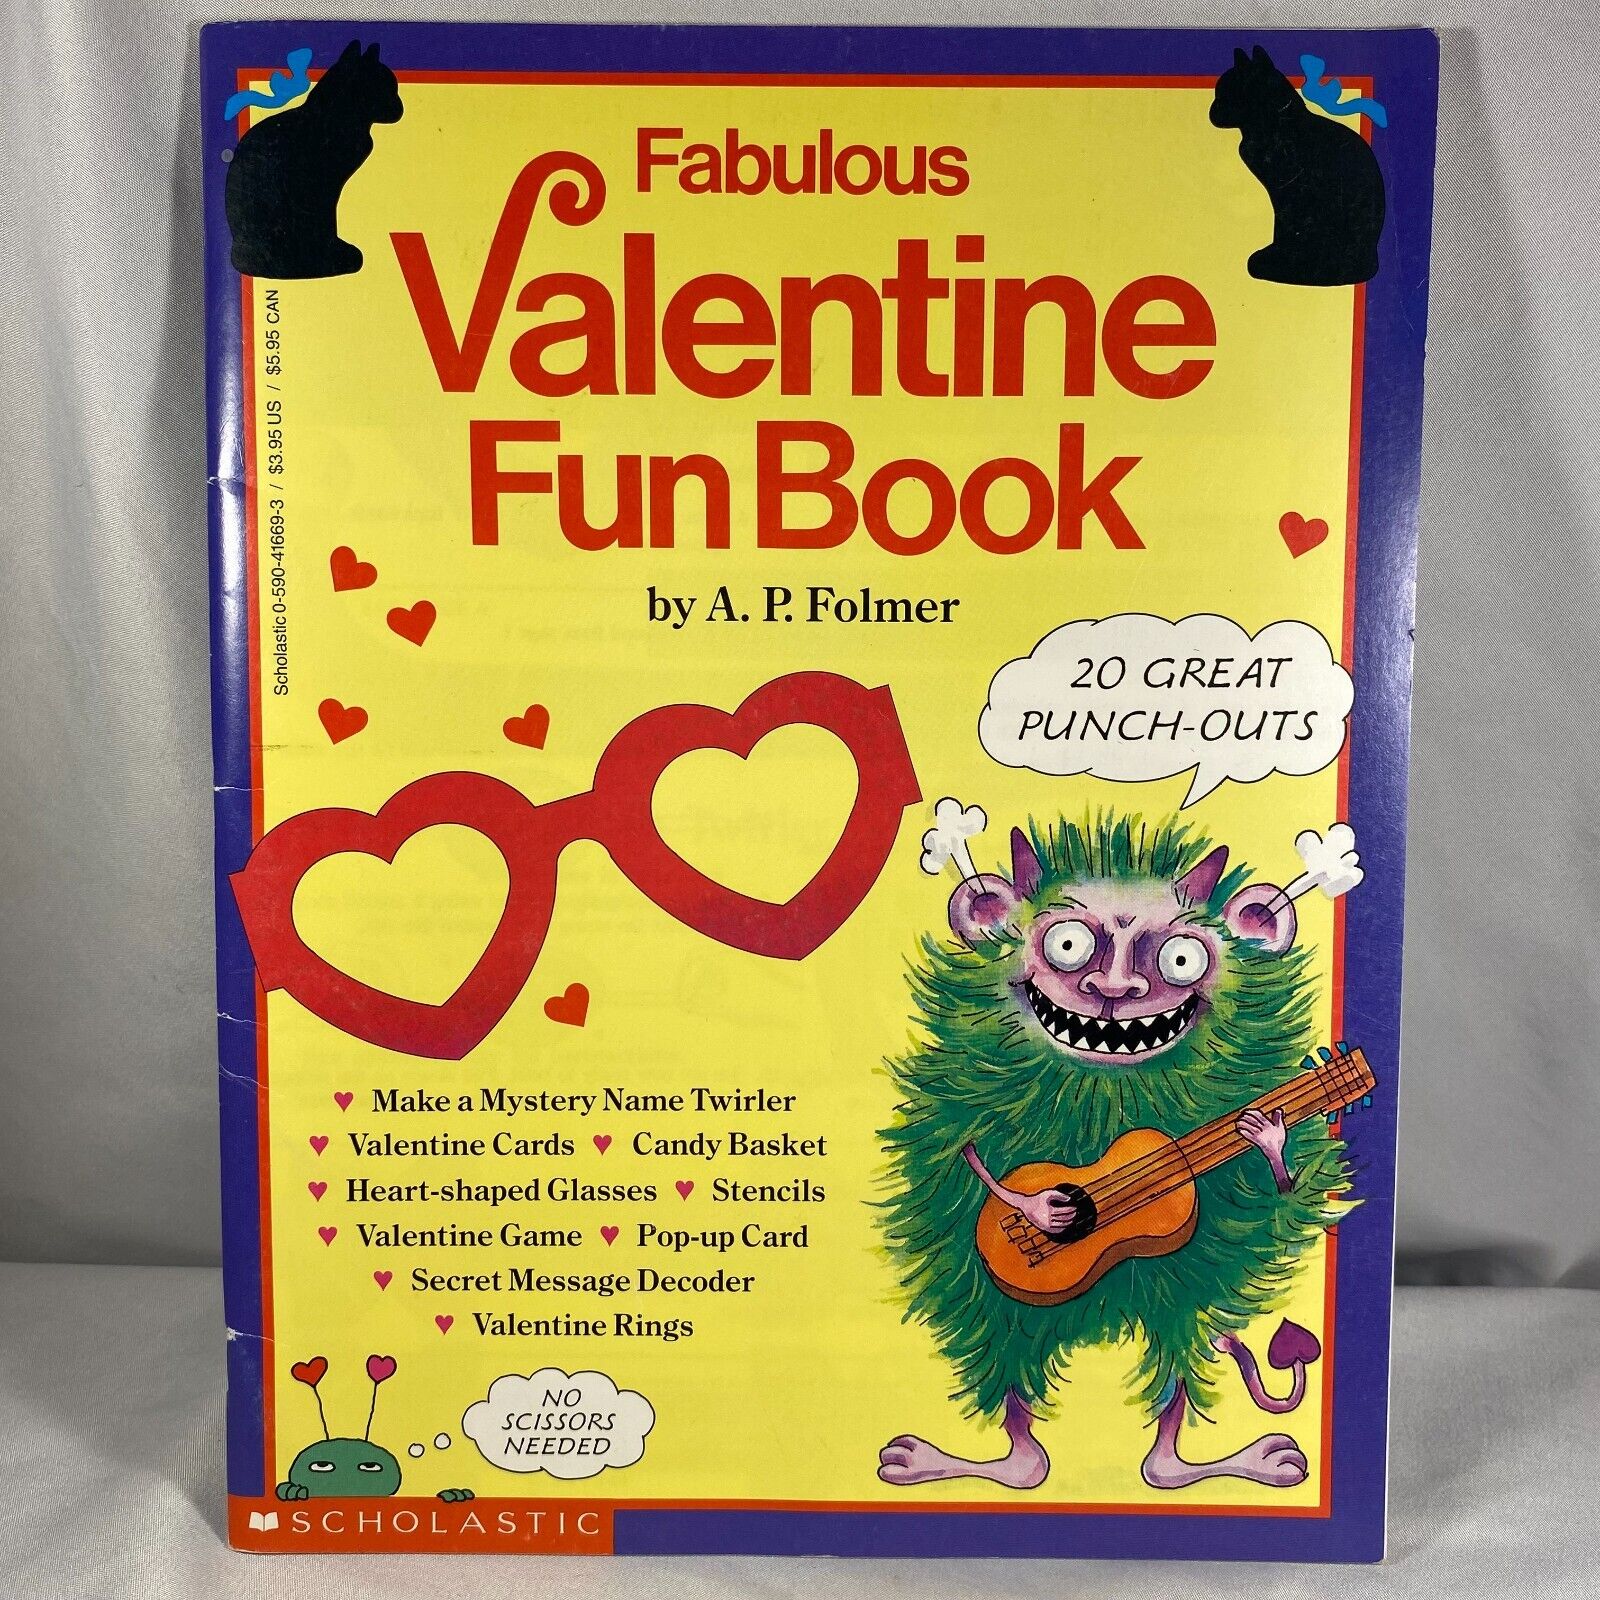 RARE VINTAGE 1989 Fabulous Valentine Fun Book - Scholastic - Complete, Unpunched